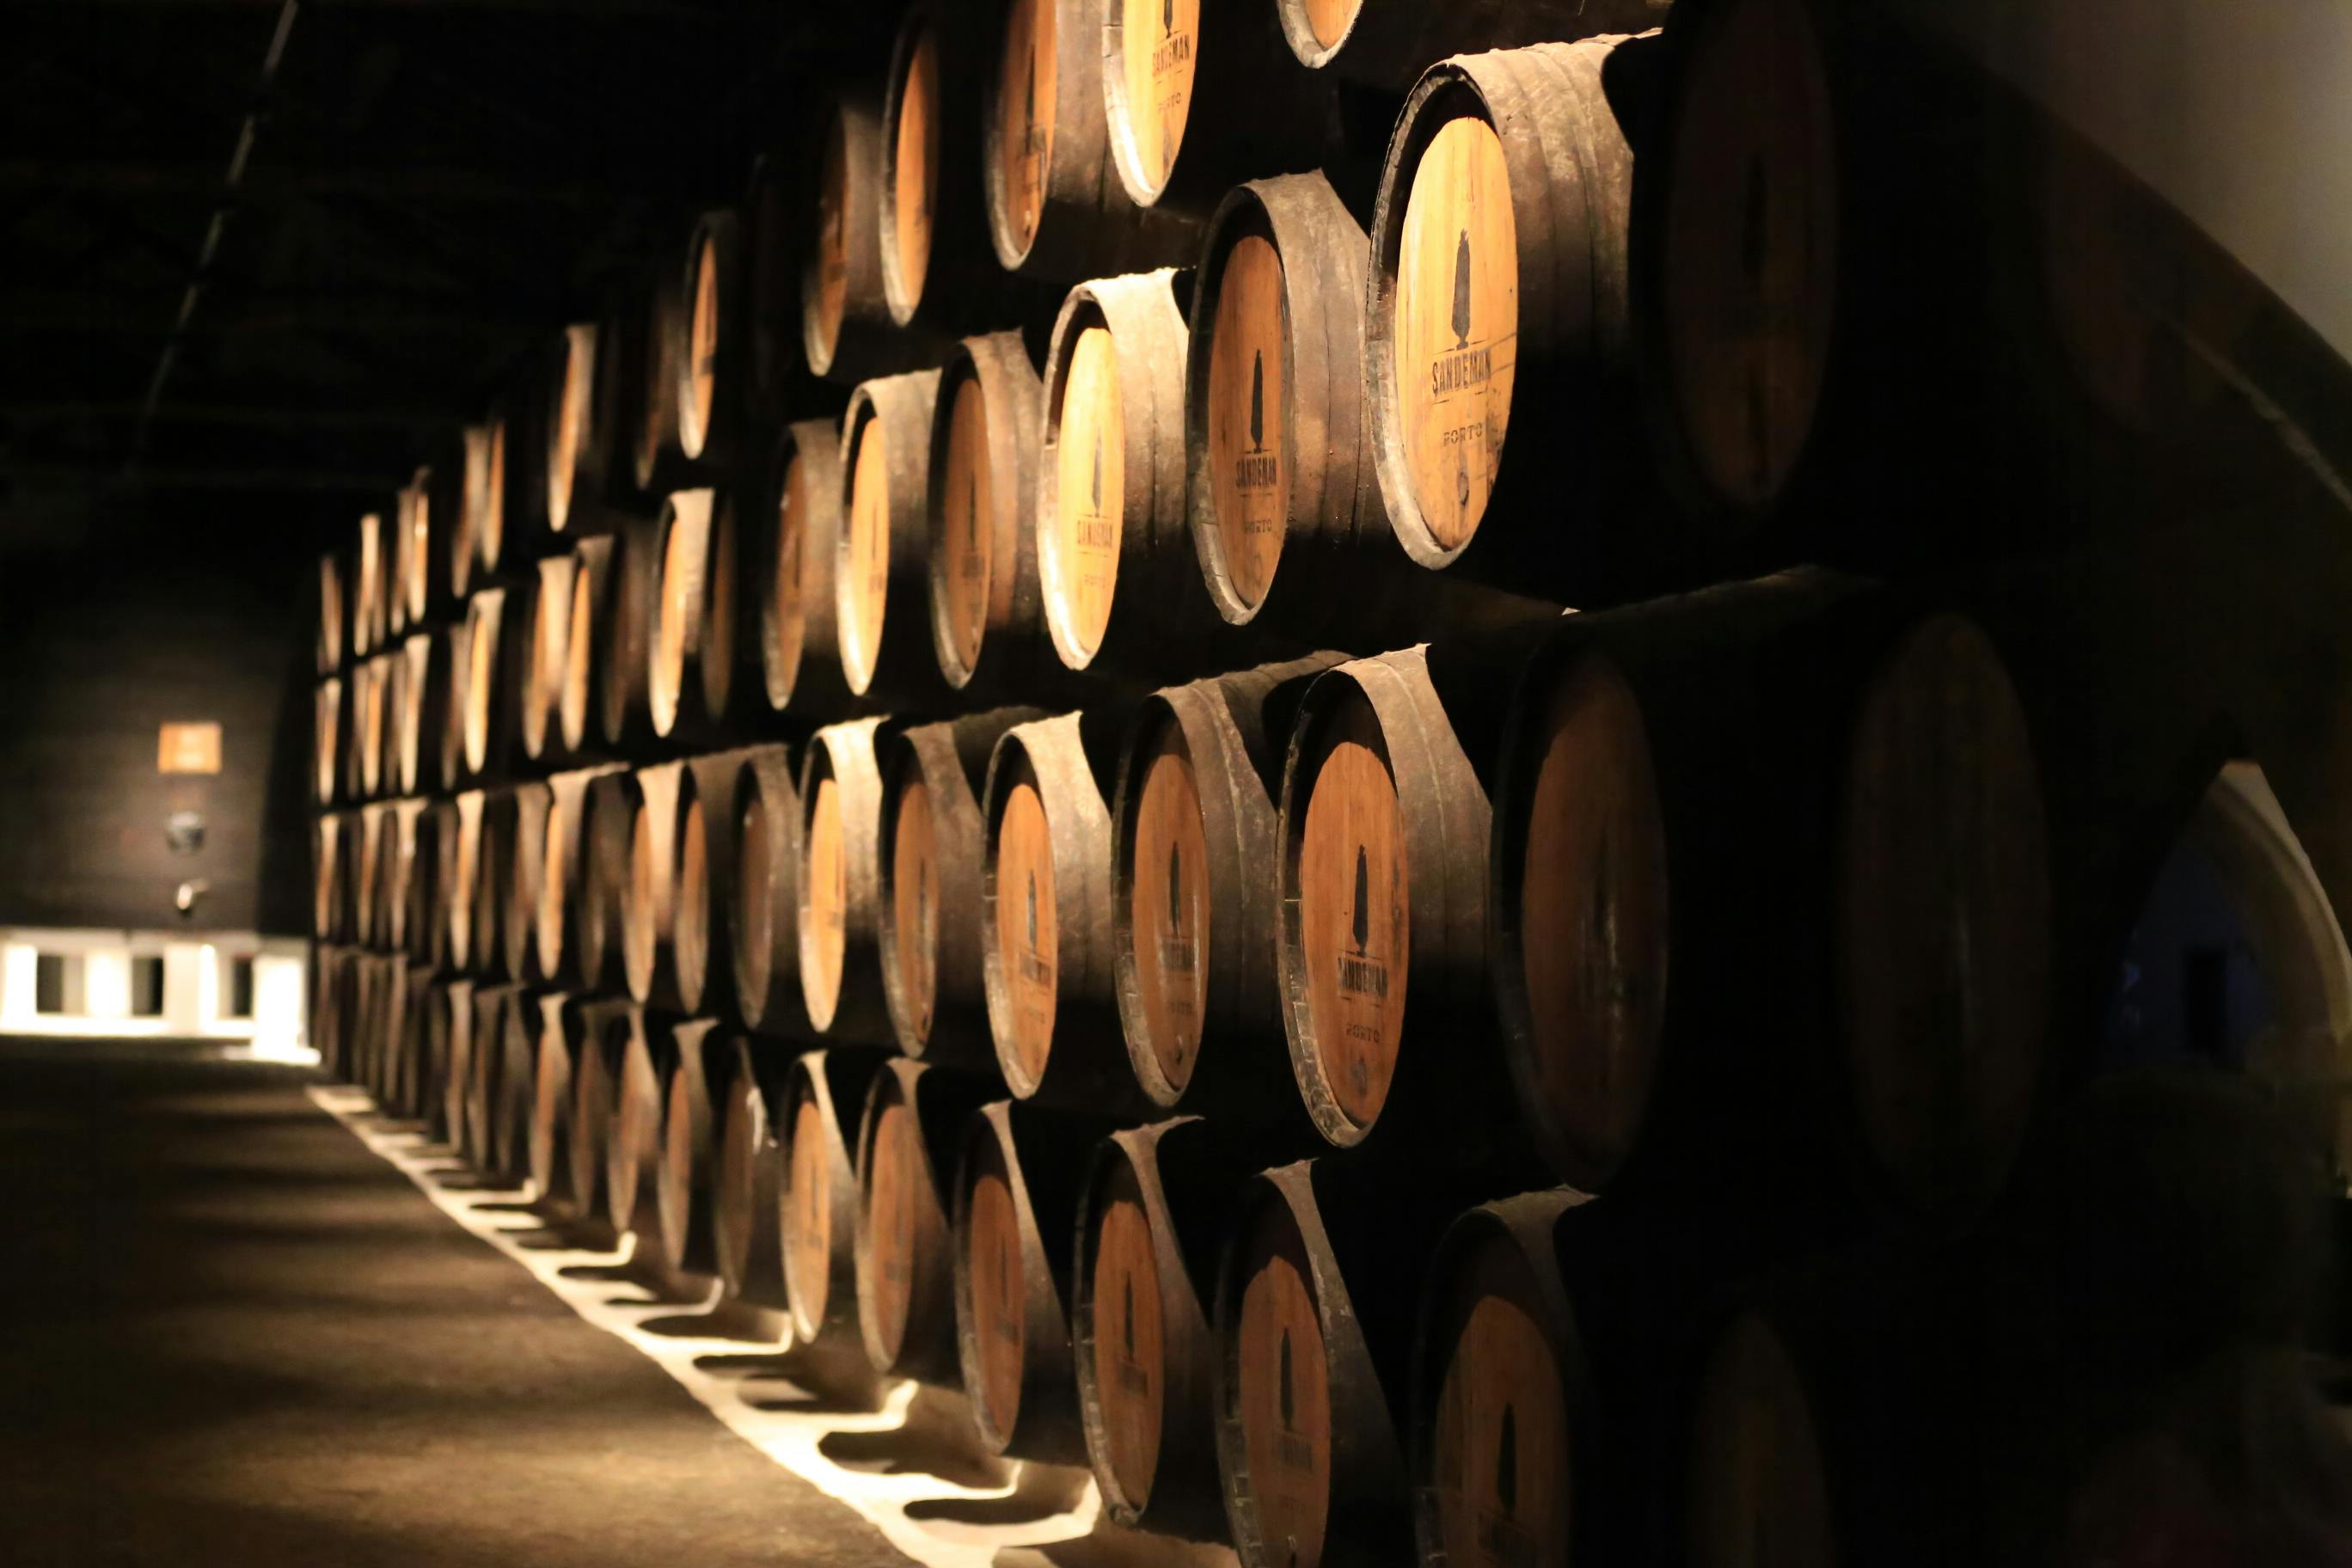 Free stock photo of barrel, port wine, Sandeman